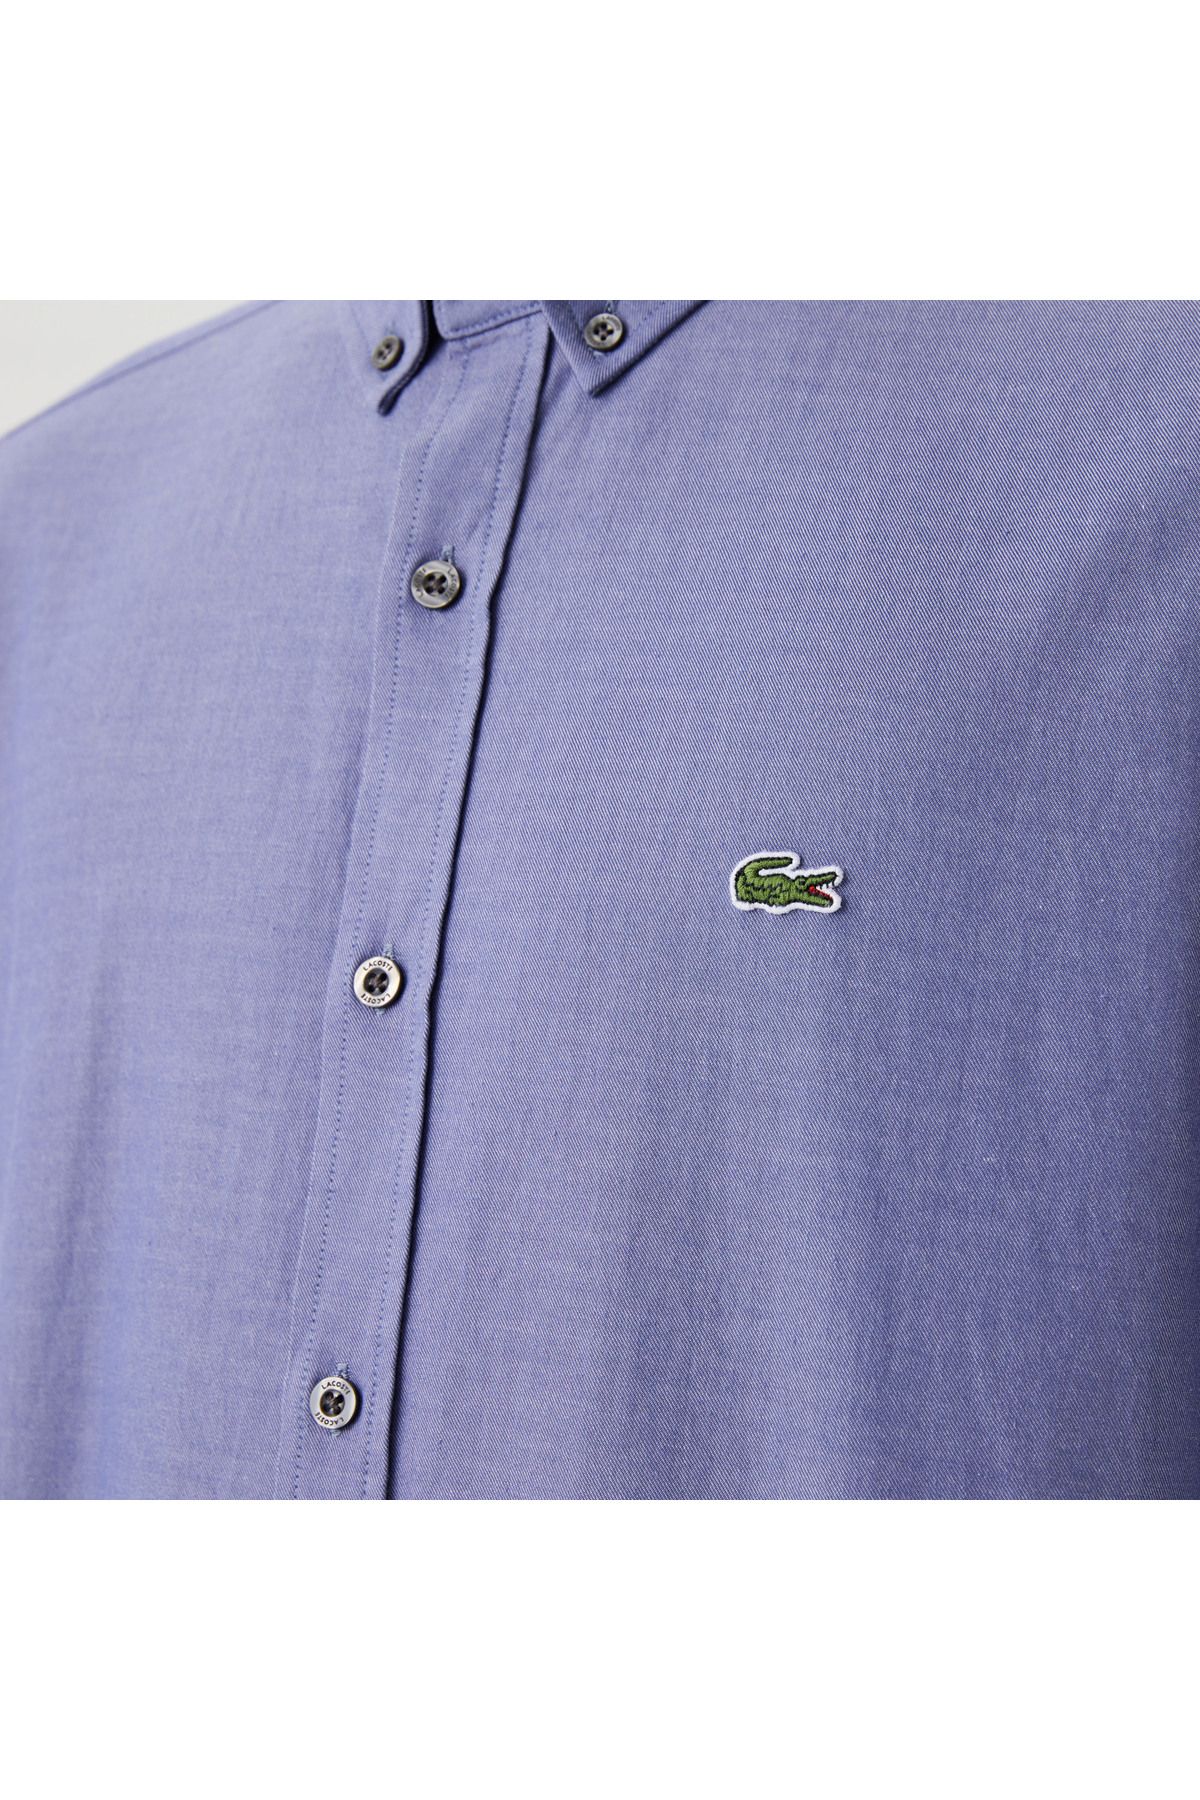 Lacoste پیراهن آبی پنبه ارگانیک یقه ای لباس باریک مردانه